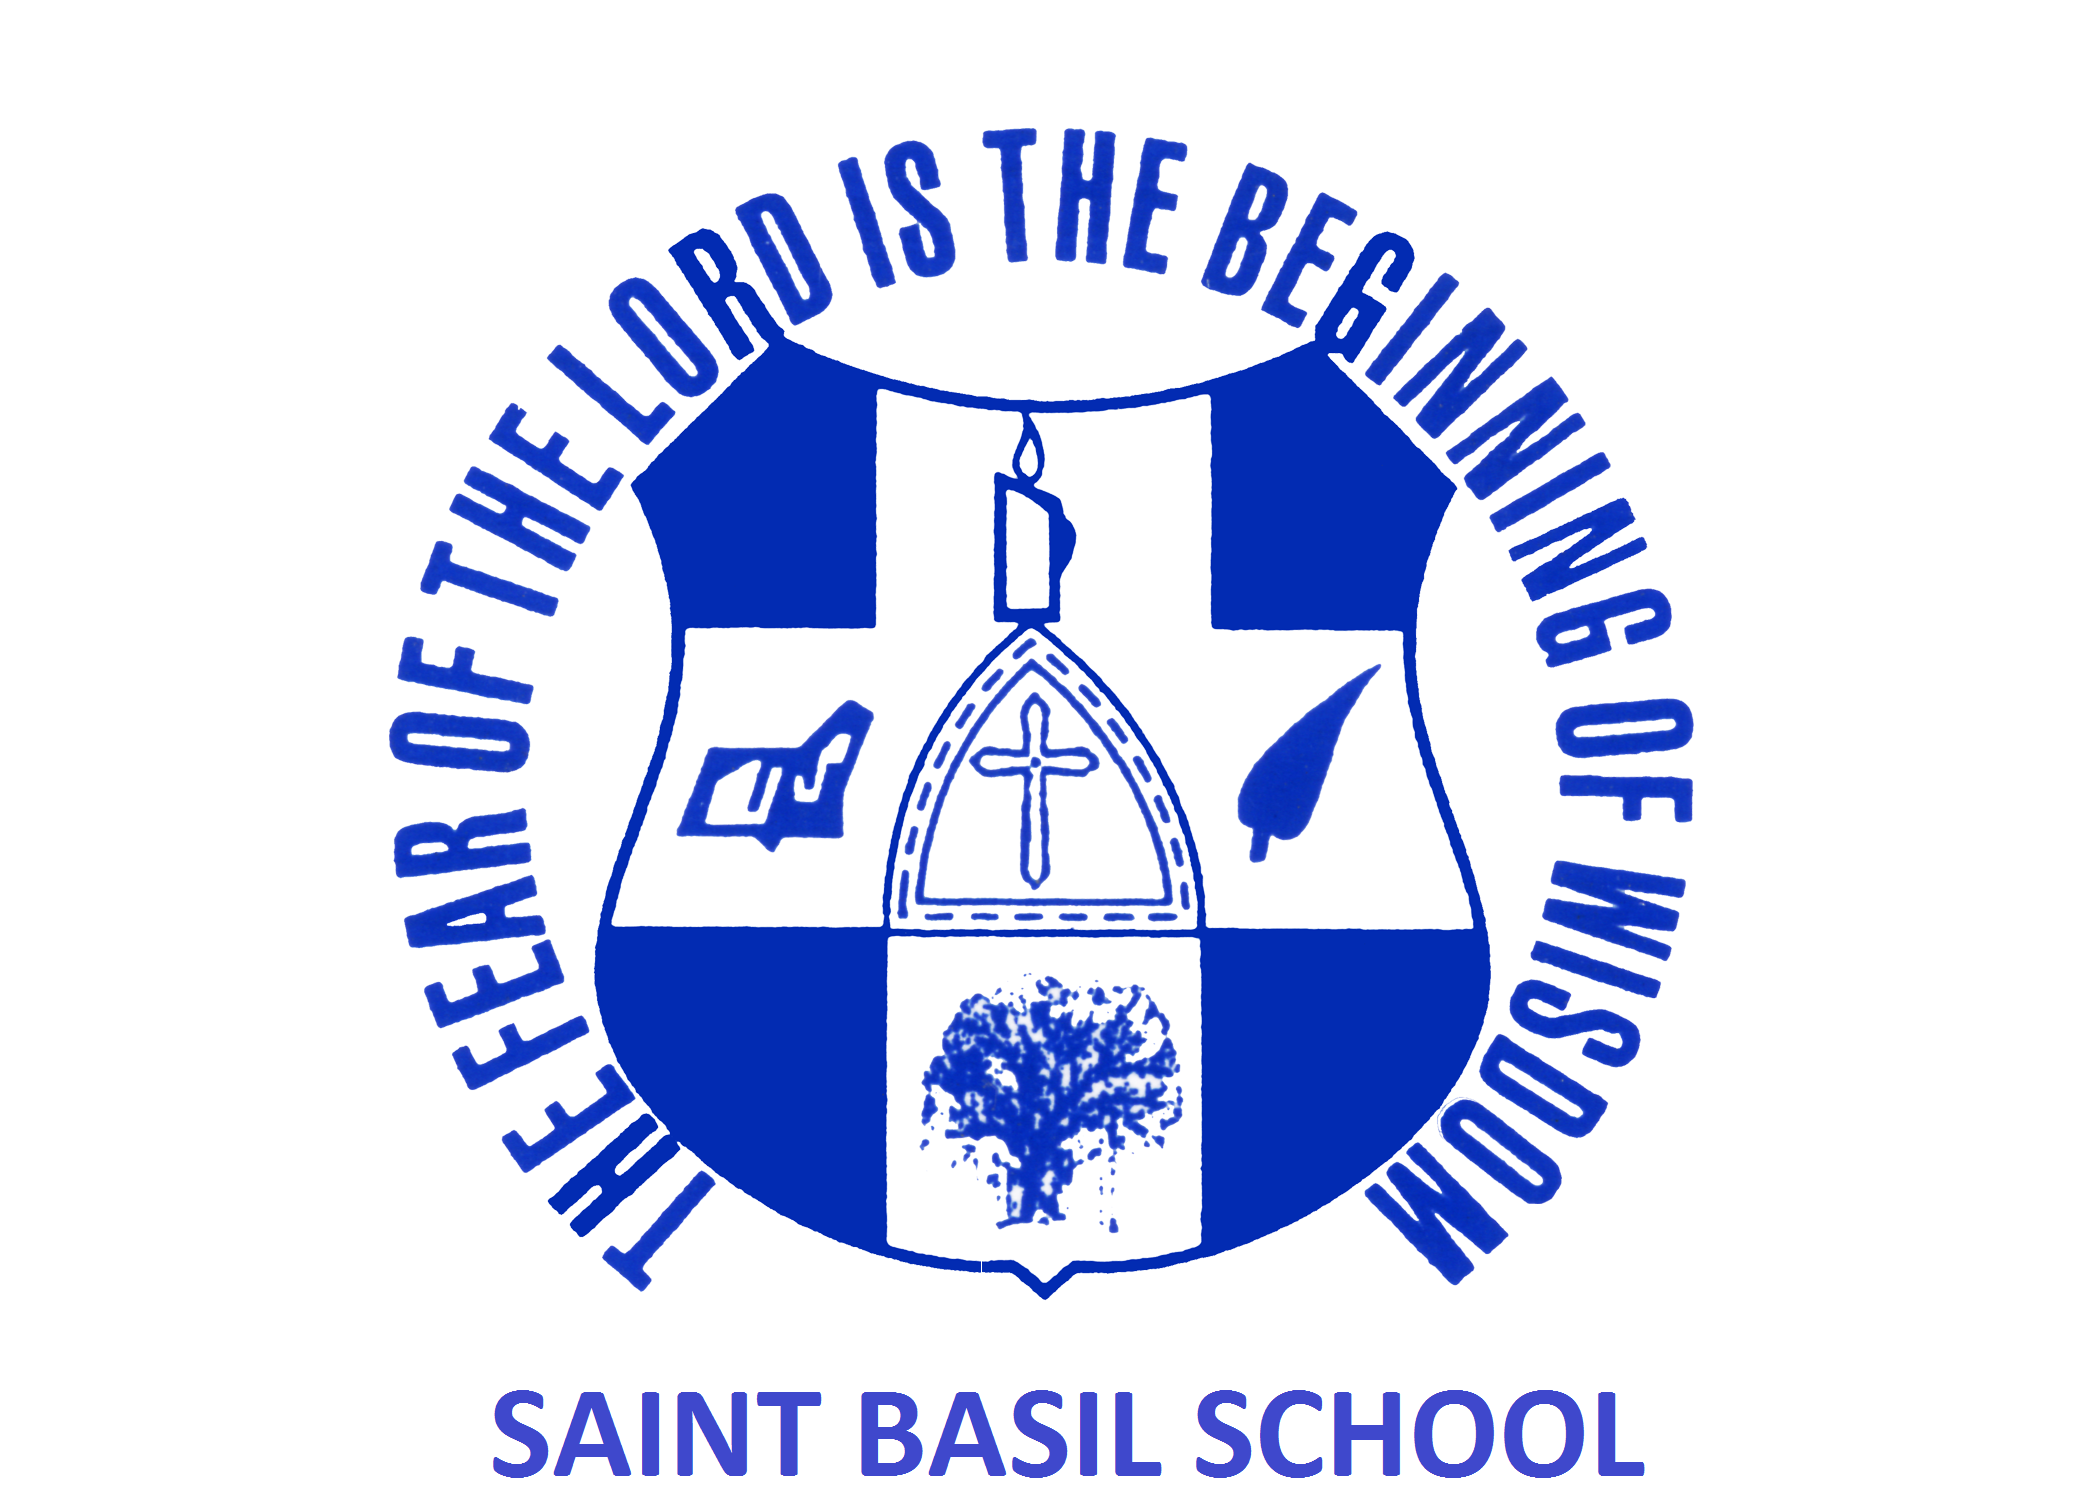 Saint Basil School|Schools|Education